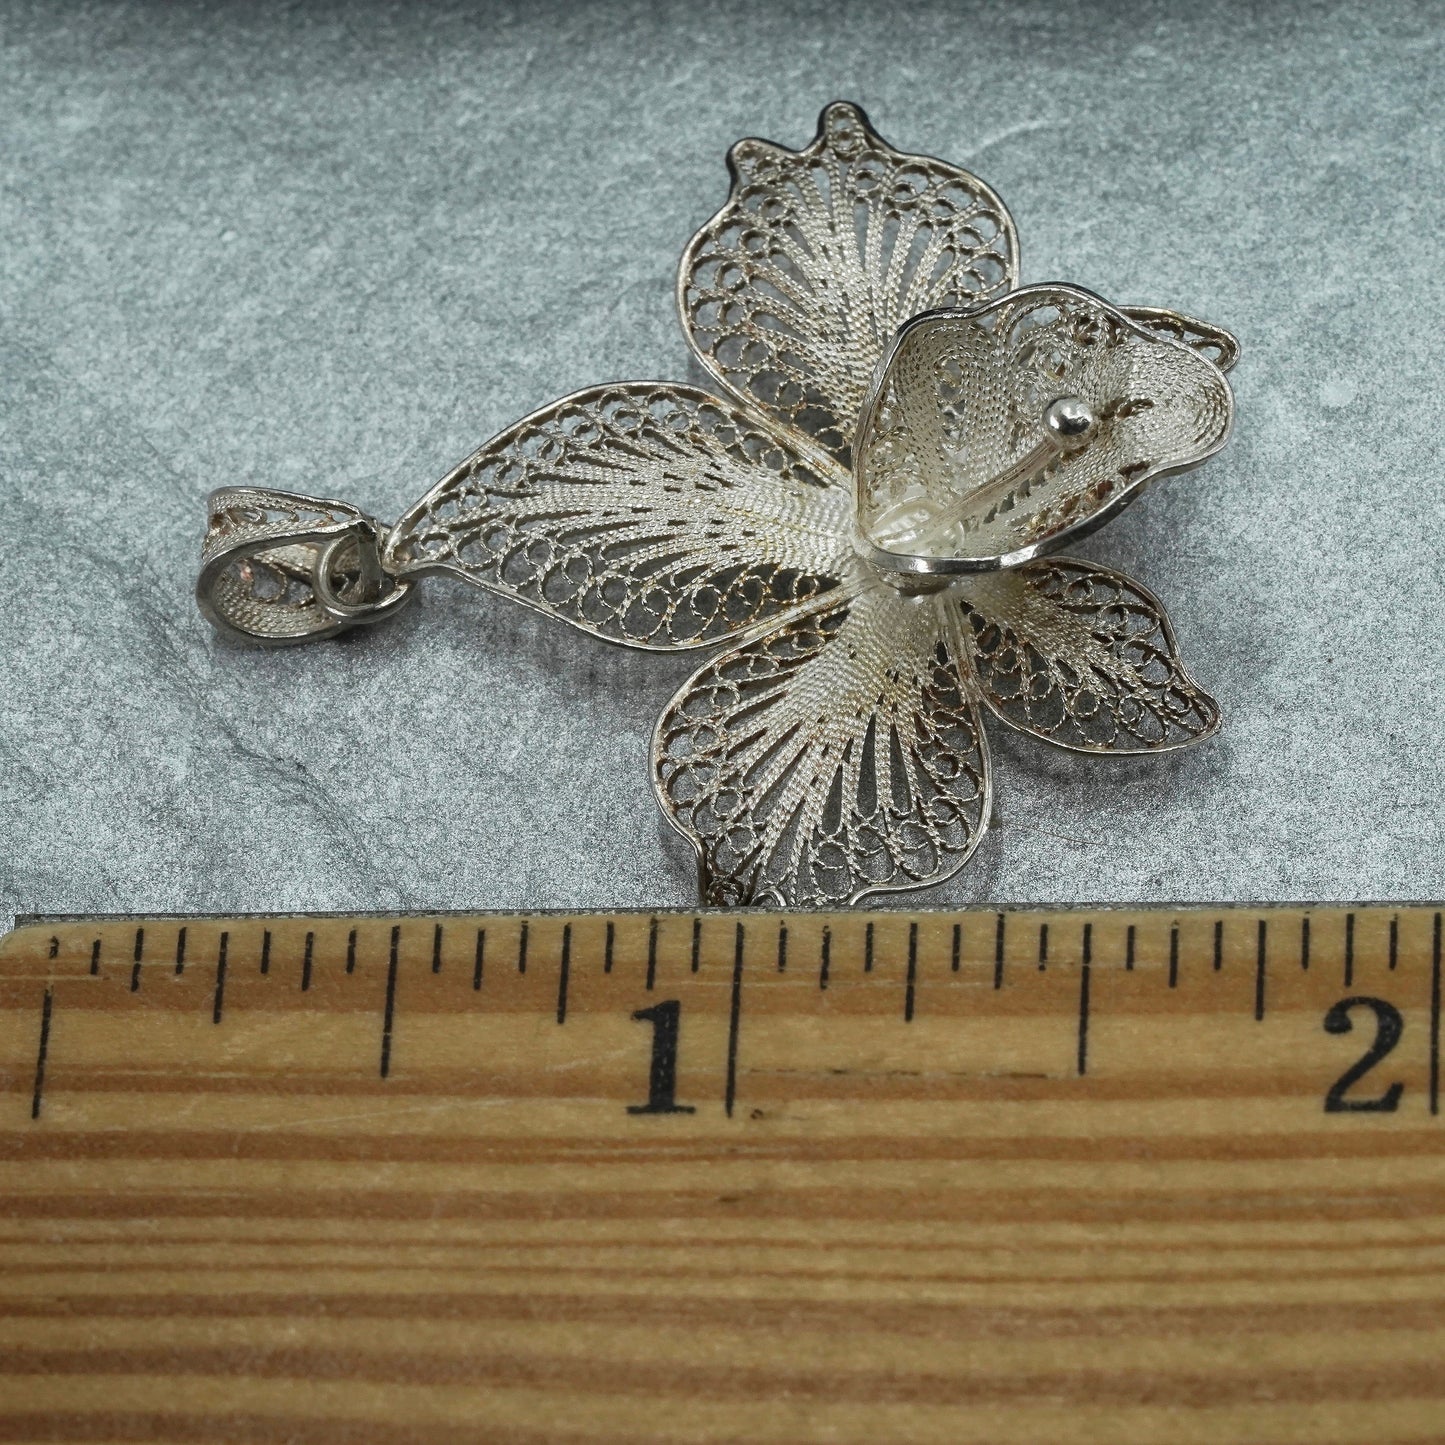 Vintage Sterling silver charm, 925 filigree flower pendant